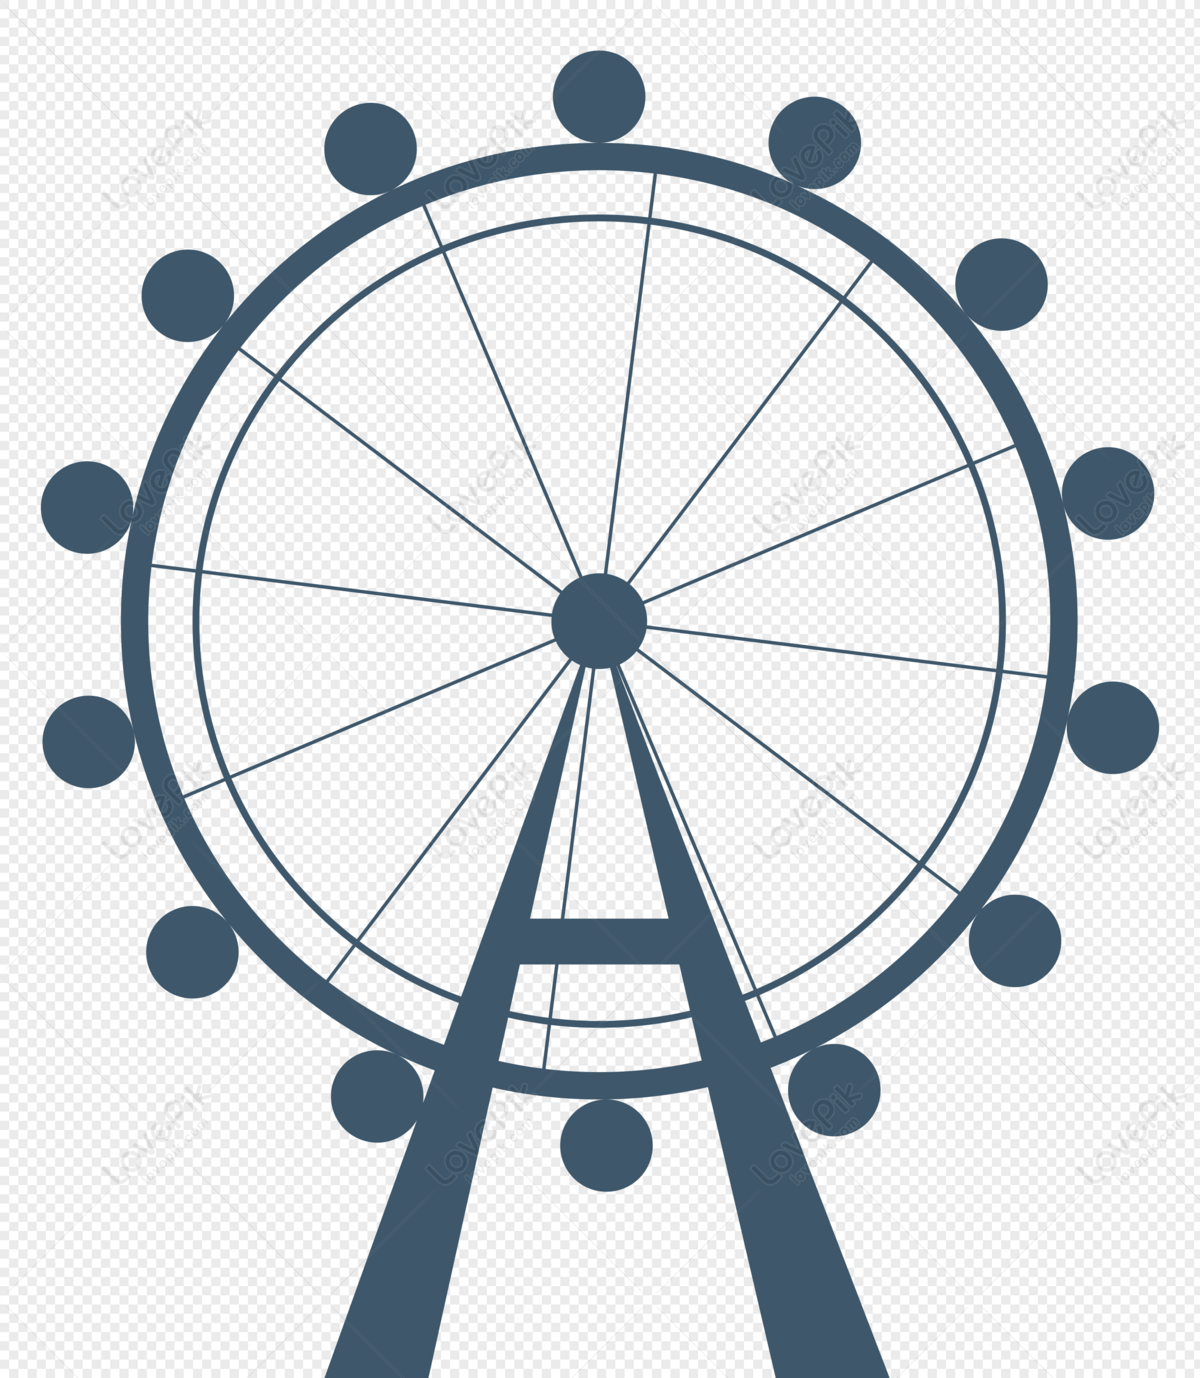 ferris wheel silhouette logos